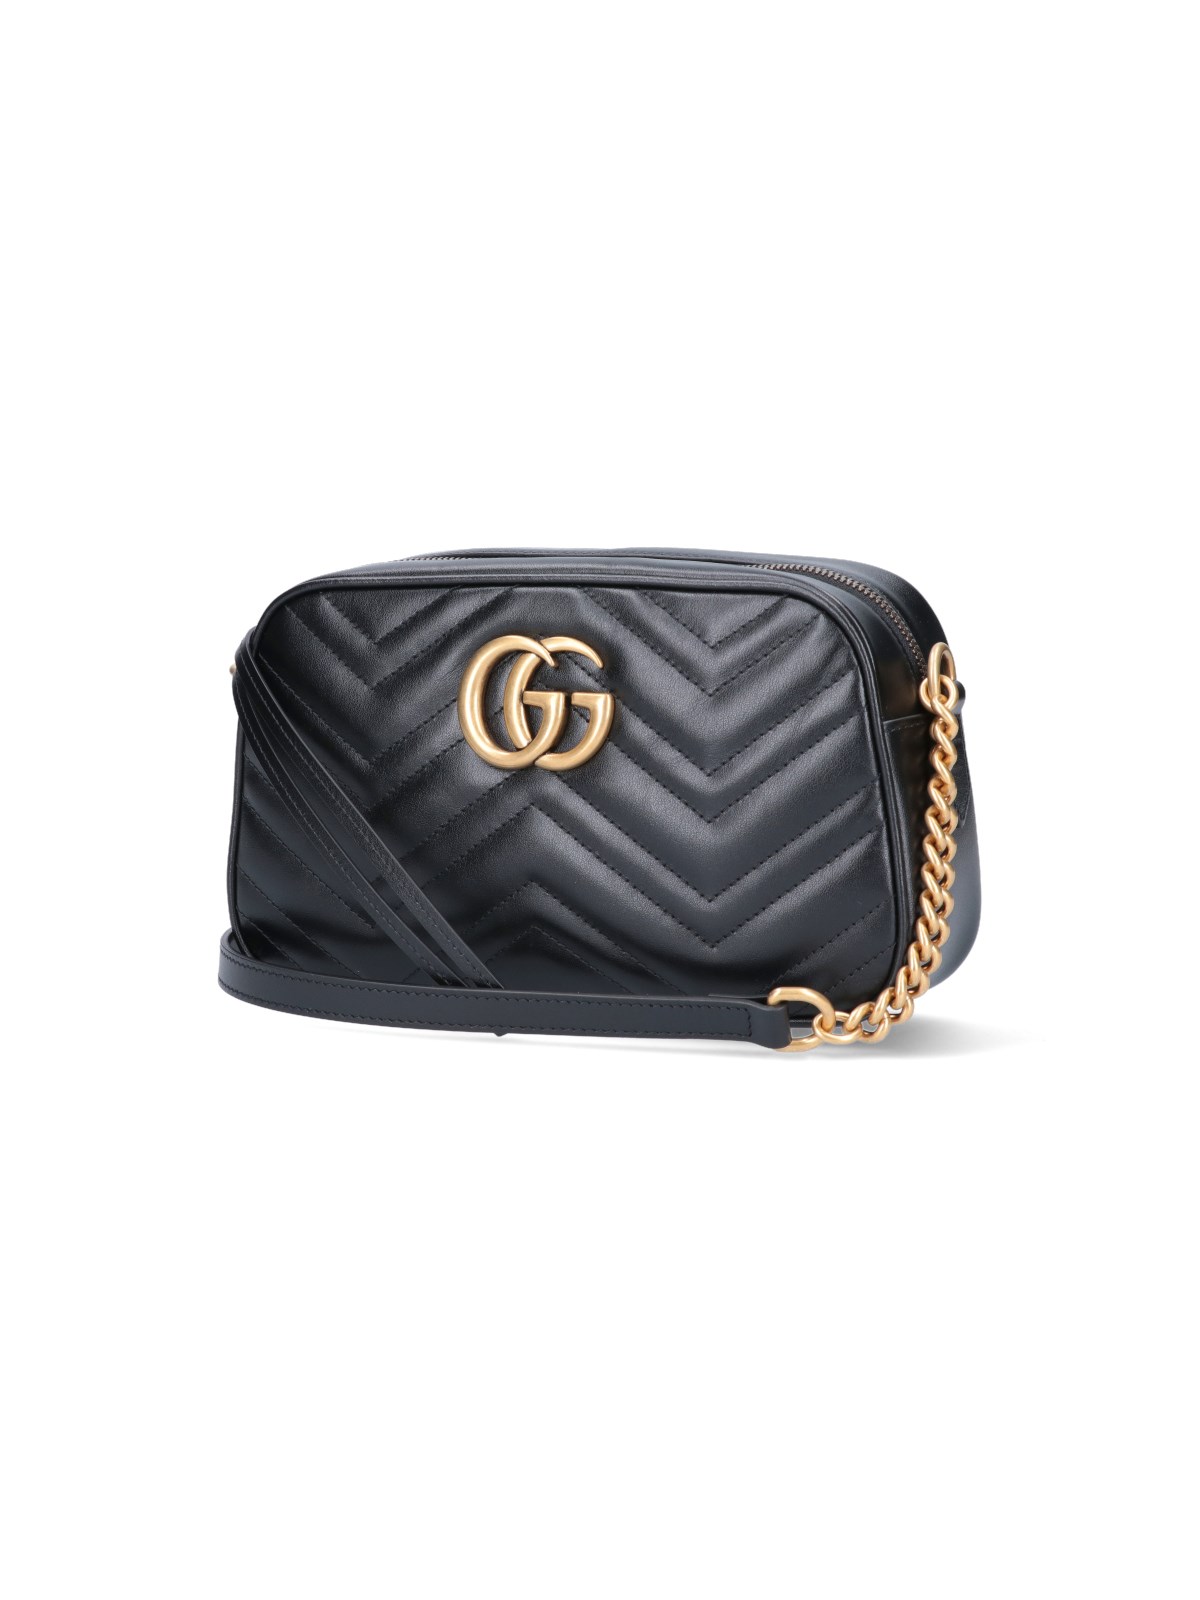 Gucci Trapuntata Camera Bag in Metallic, Leather | Handbag Clinic